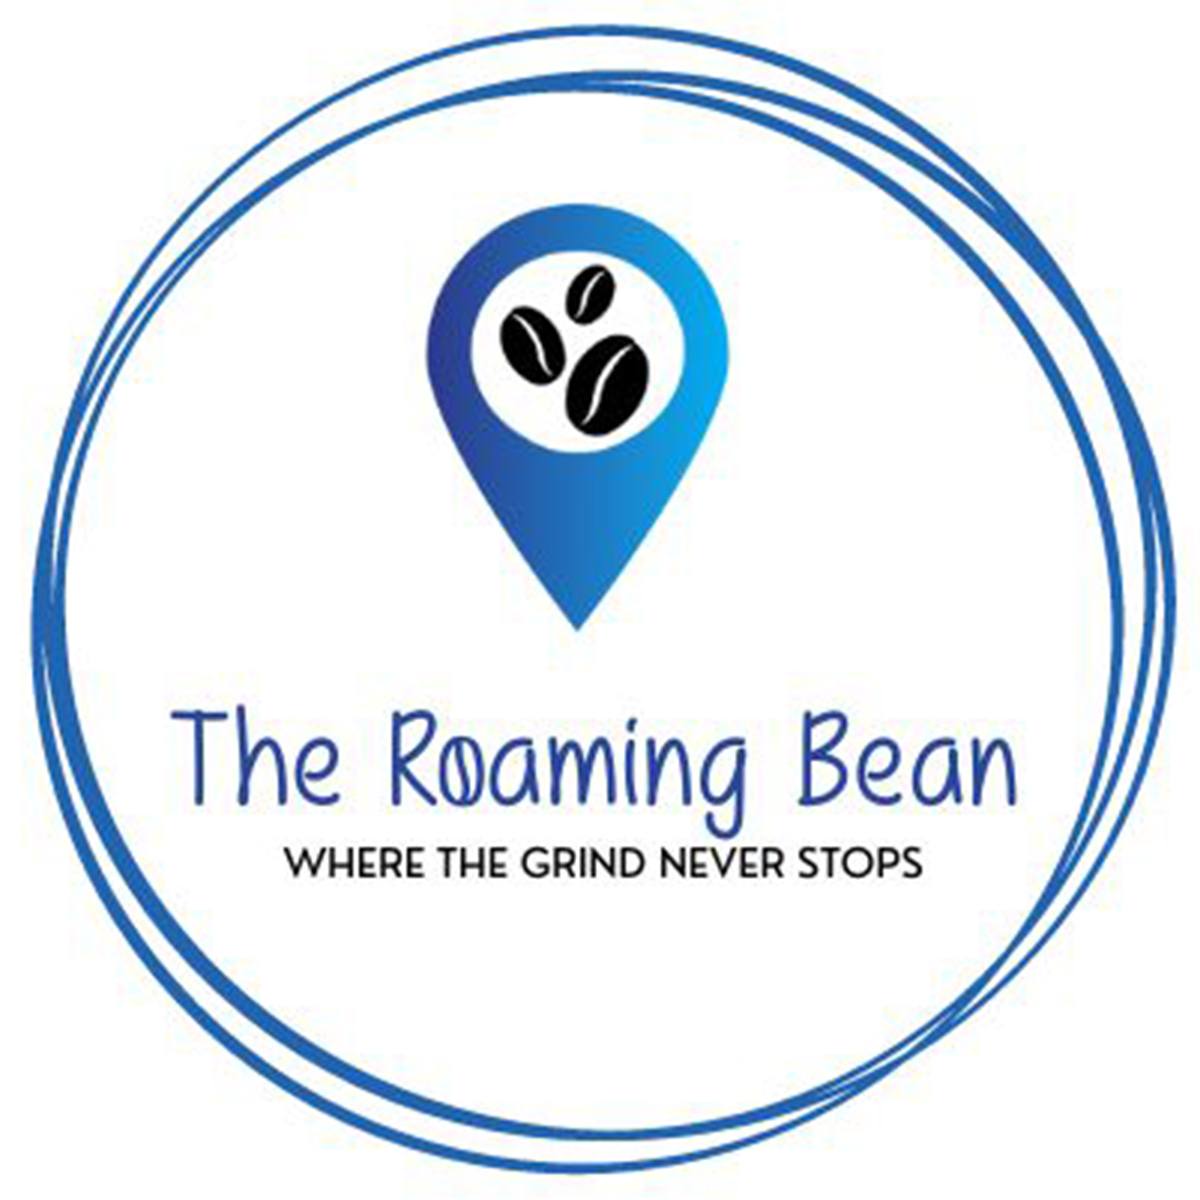 The Roaming Bean